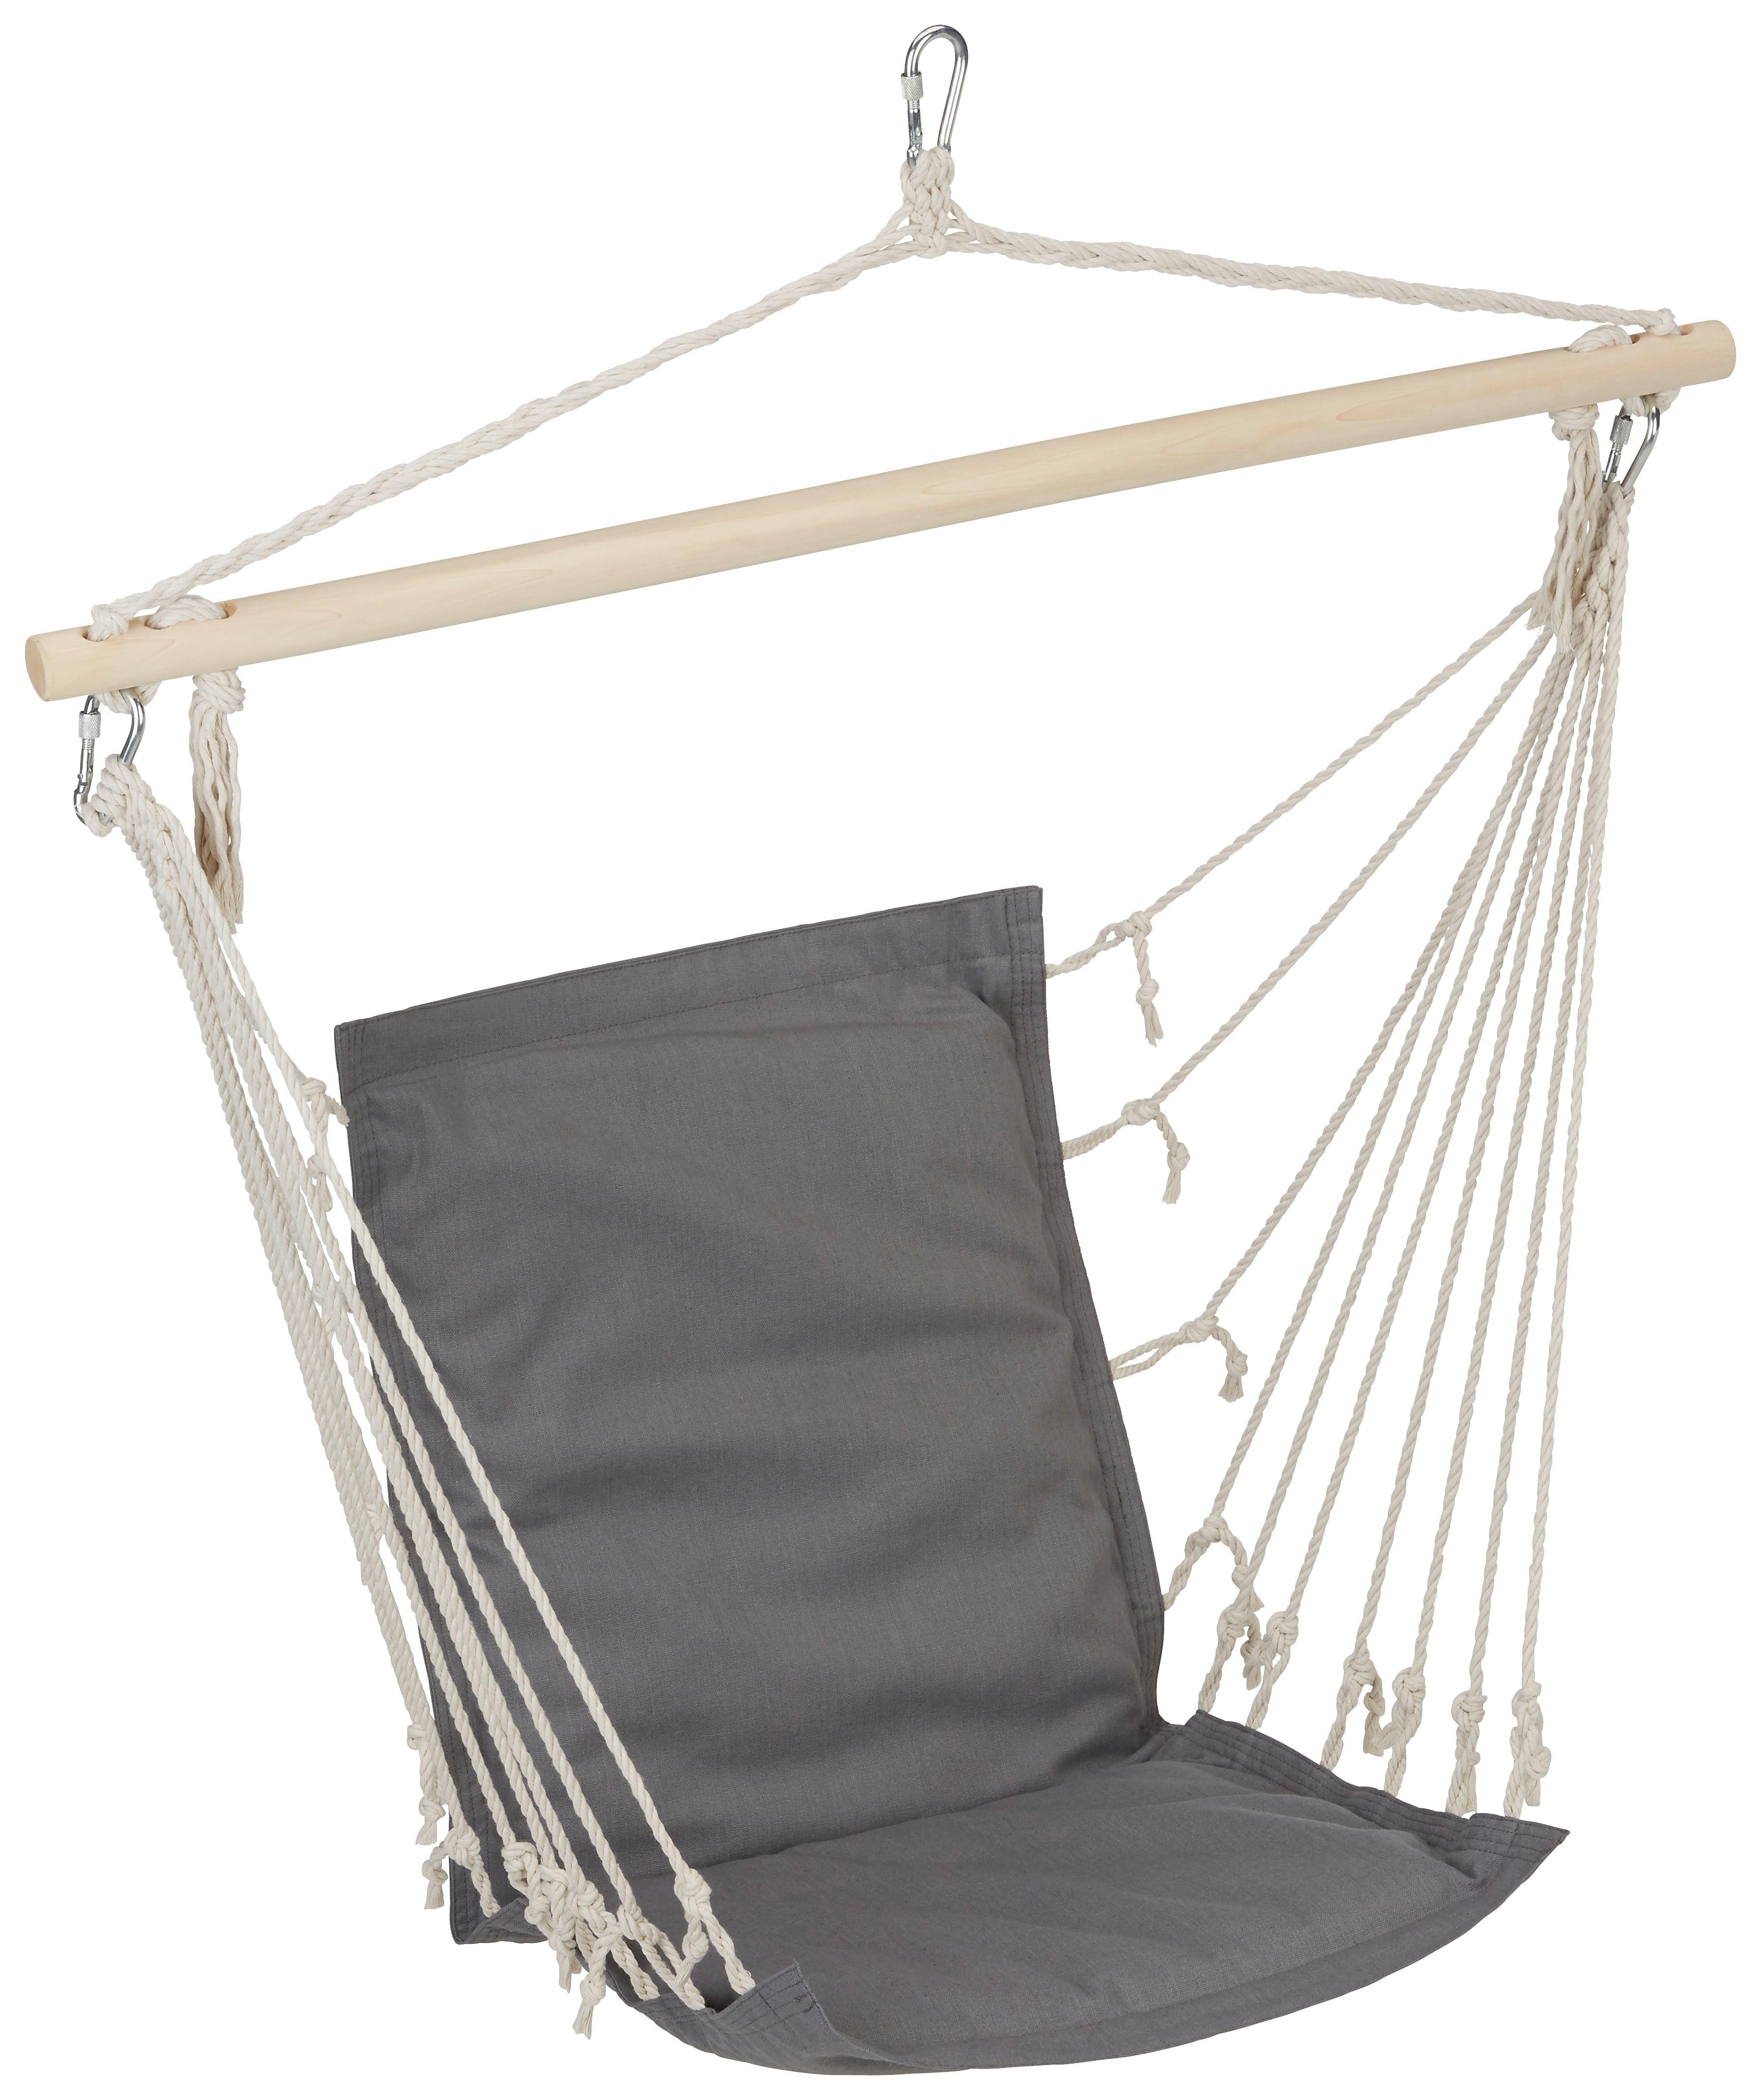 Viseč Sedež Relax - siva/naravne barve, tekstil/les (100/47cm) - Modern Living